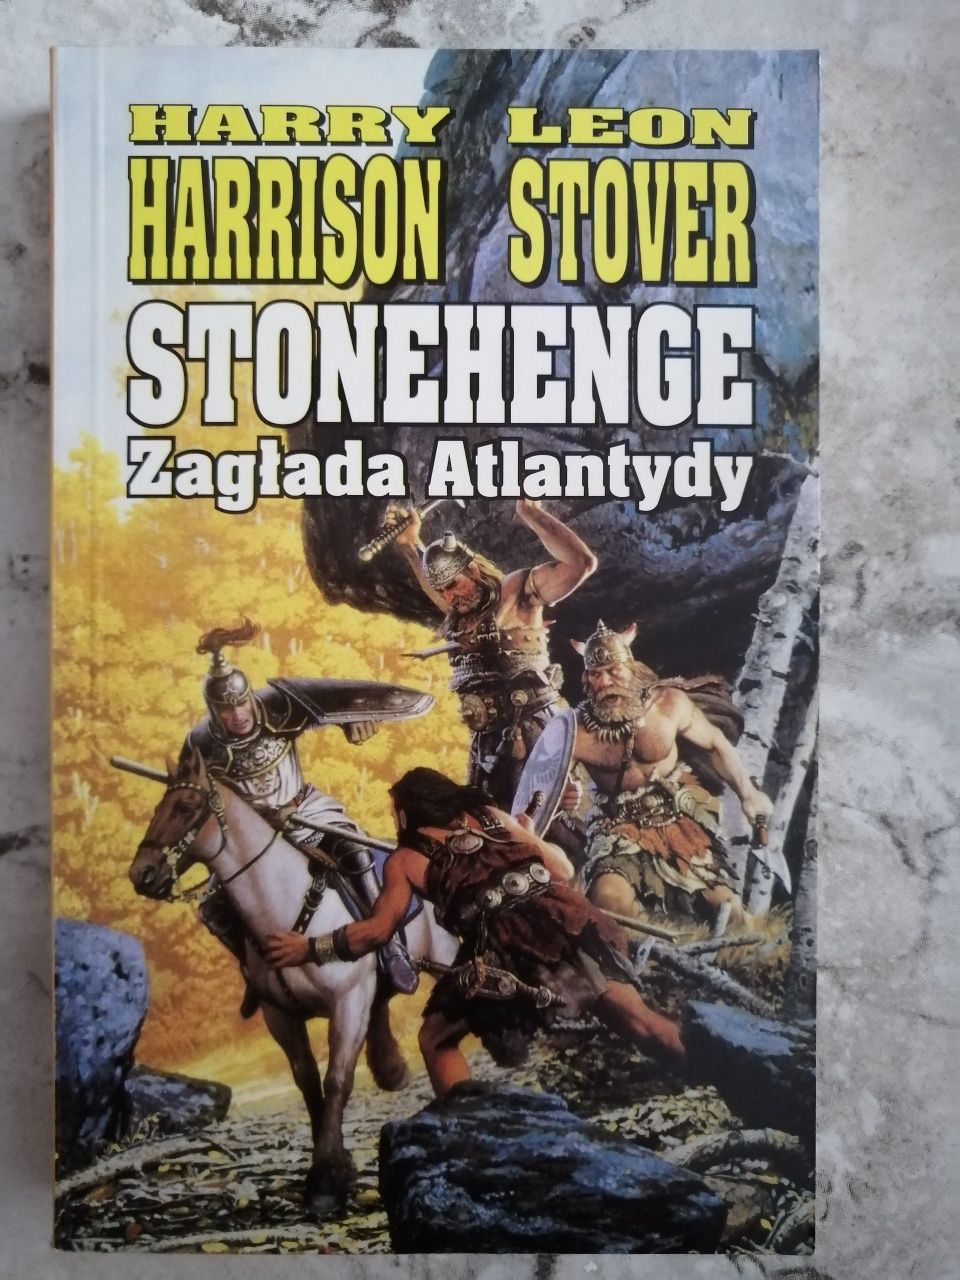 Stonehenge. Zagłada Atlantydy. H. Harrison, L. Stover